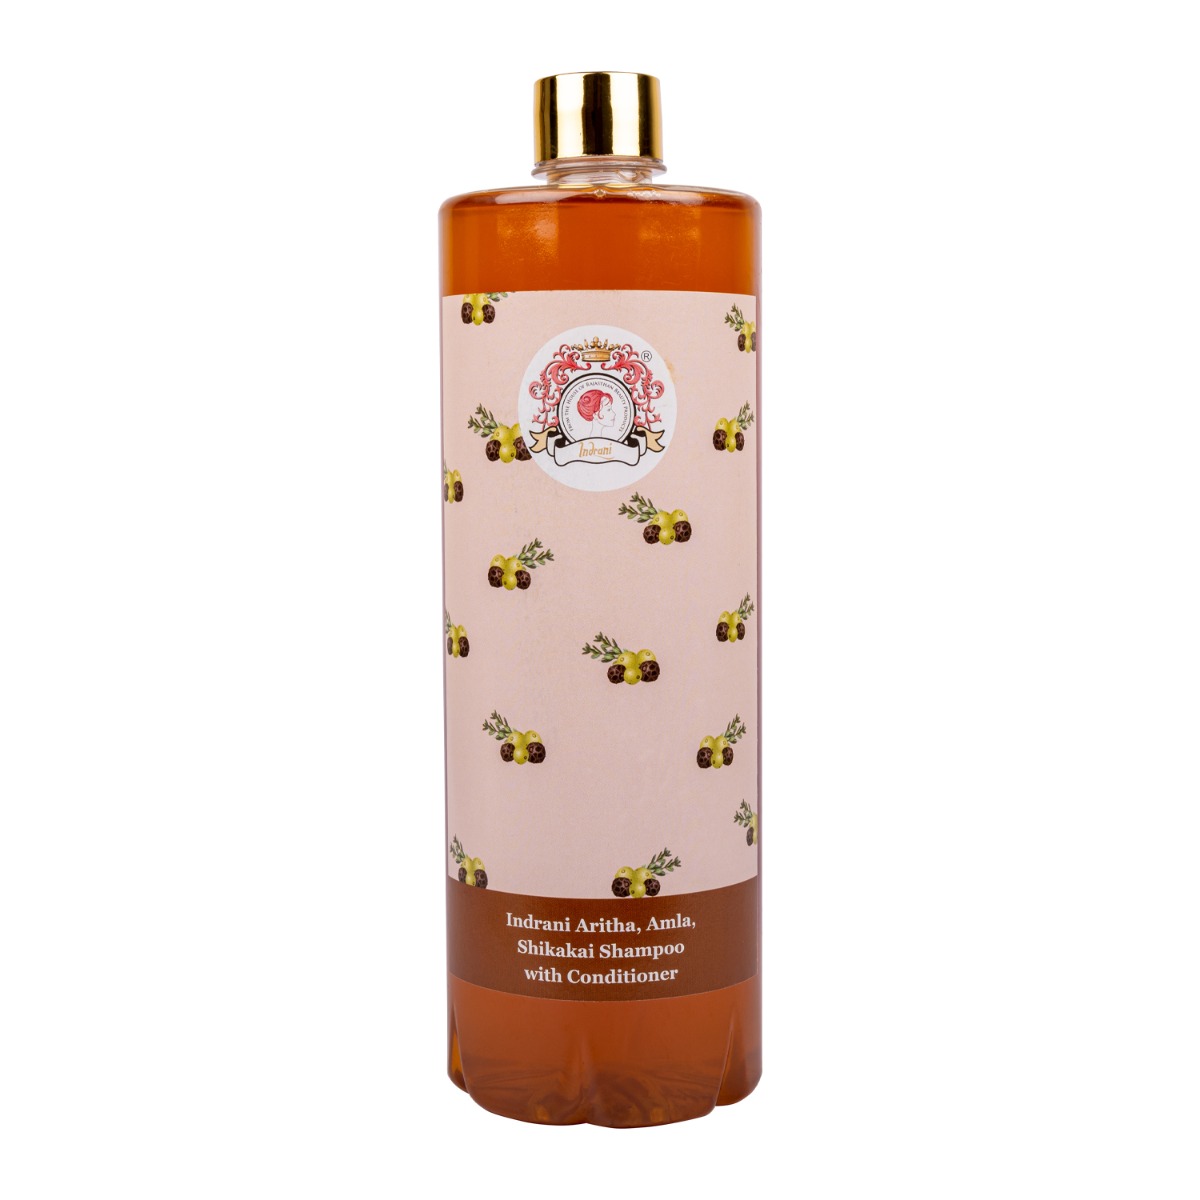 Indrani Aritha Amla Shampoo with Conditioner, 1ltr